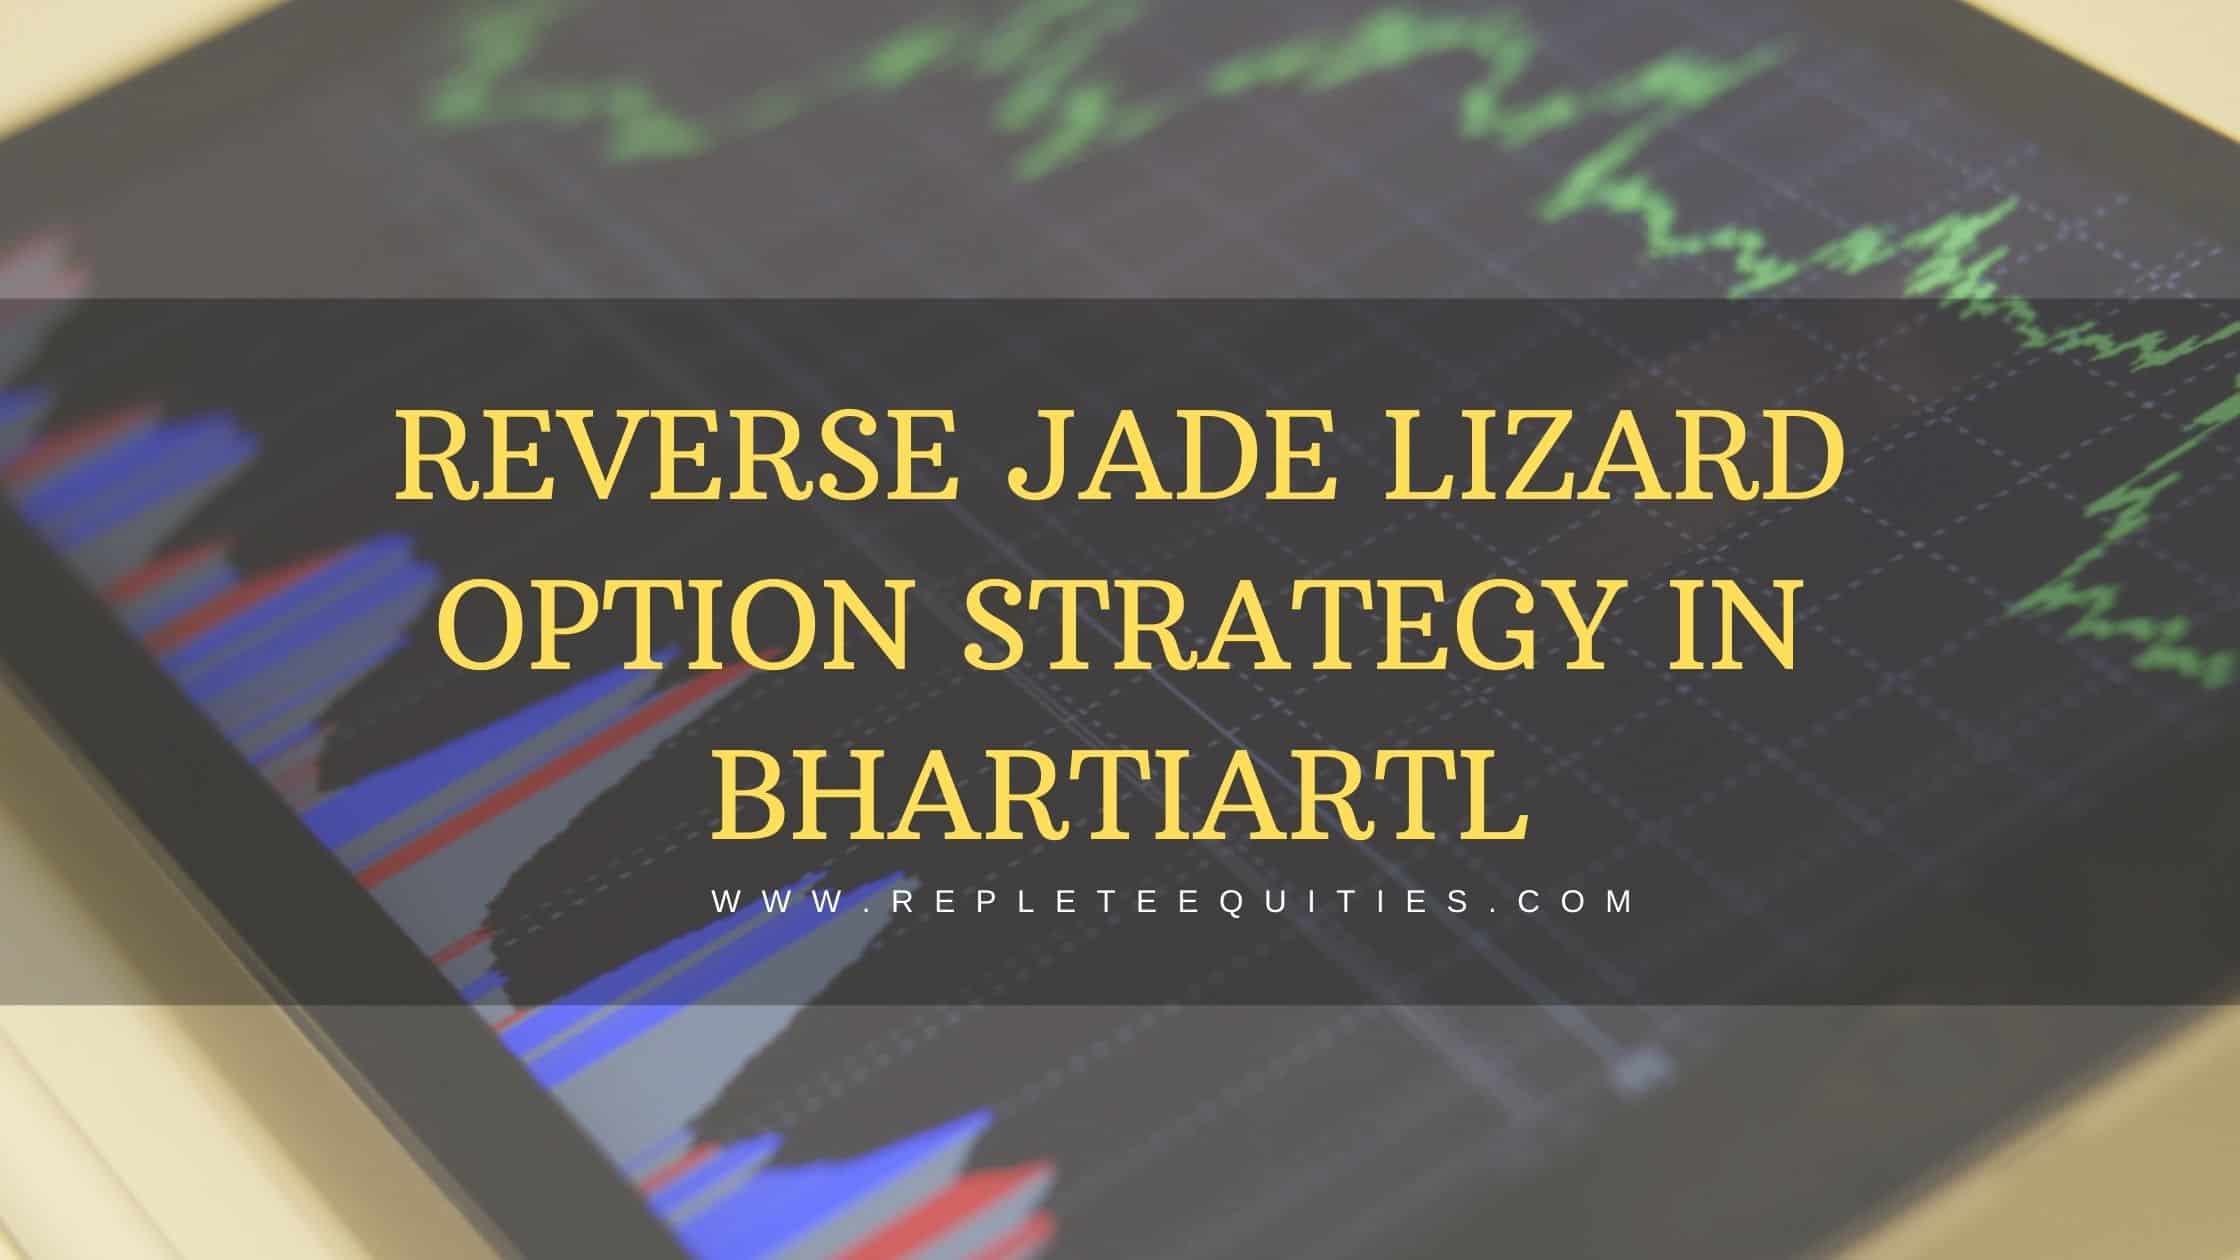 Reverse Jade Lizard option strategy in BHARTIARTL